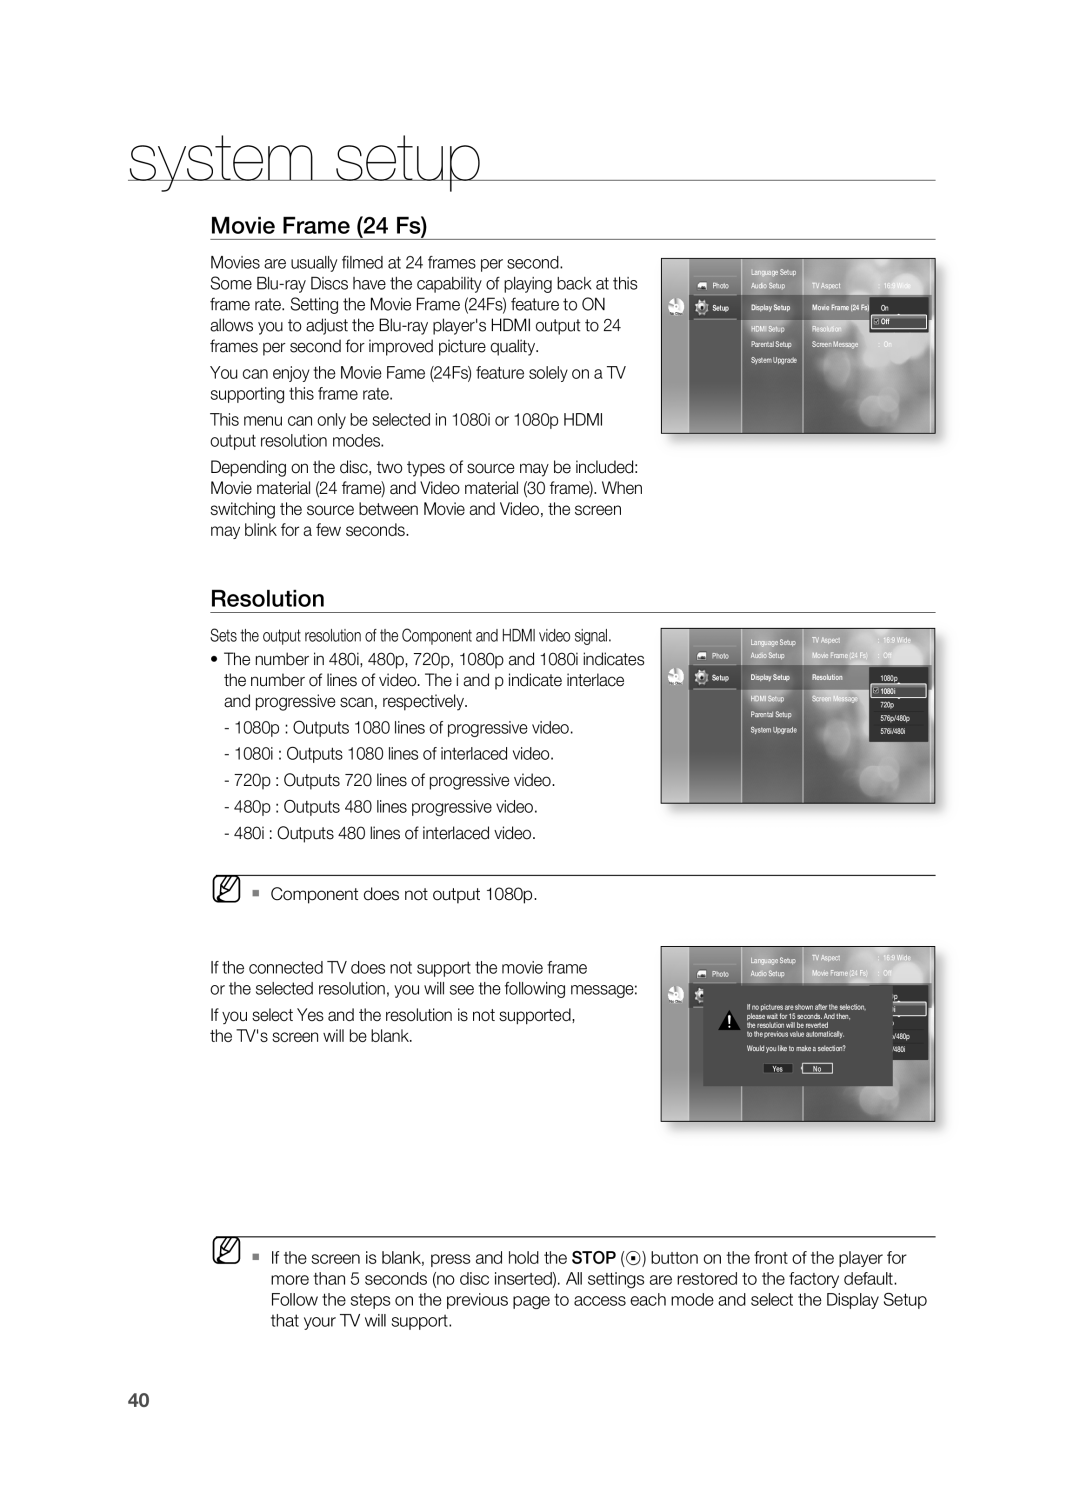 Samsung HT-BD2S manual Movie Frame 24 Fs, Resolution, system setup, frames per second for improved picture quality 